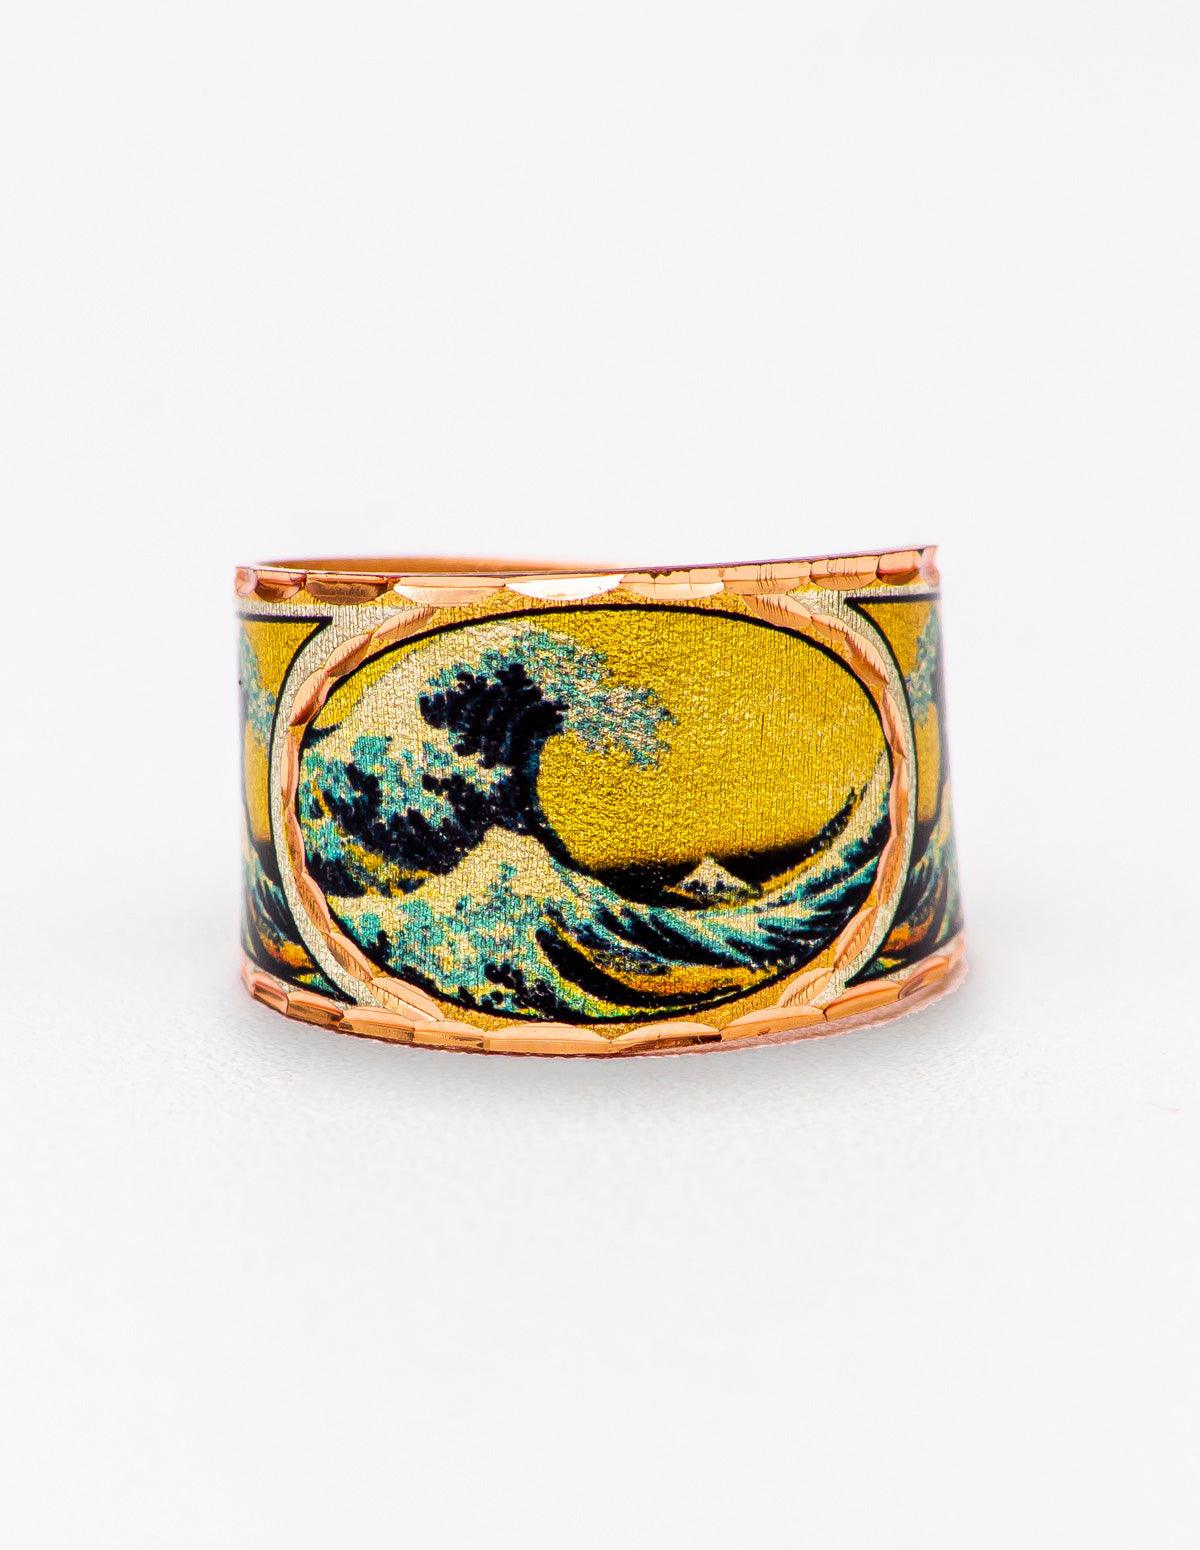 Katsushika Hokusai The Great Wave Ring - artucky-US - great, great wave, import_2022_07_19_113509, the great, the great wave, wave